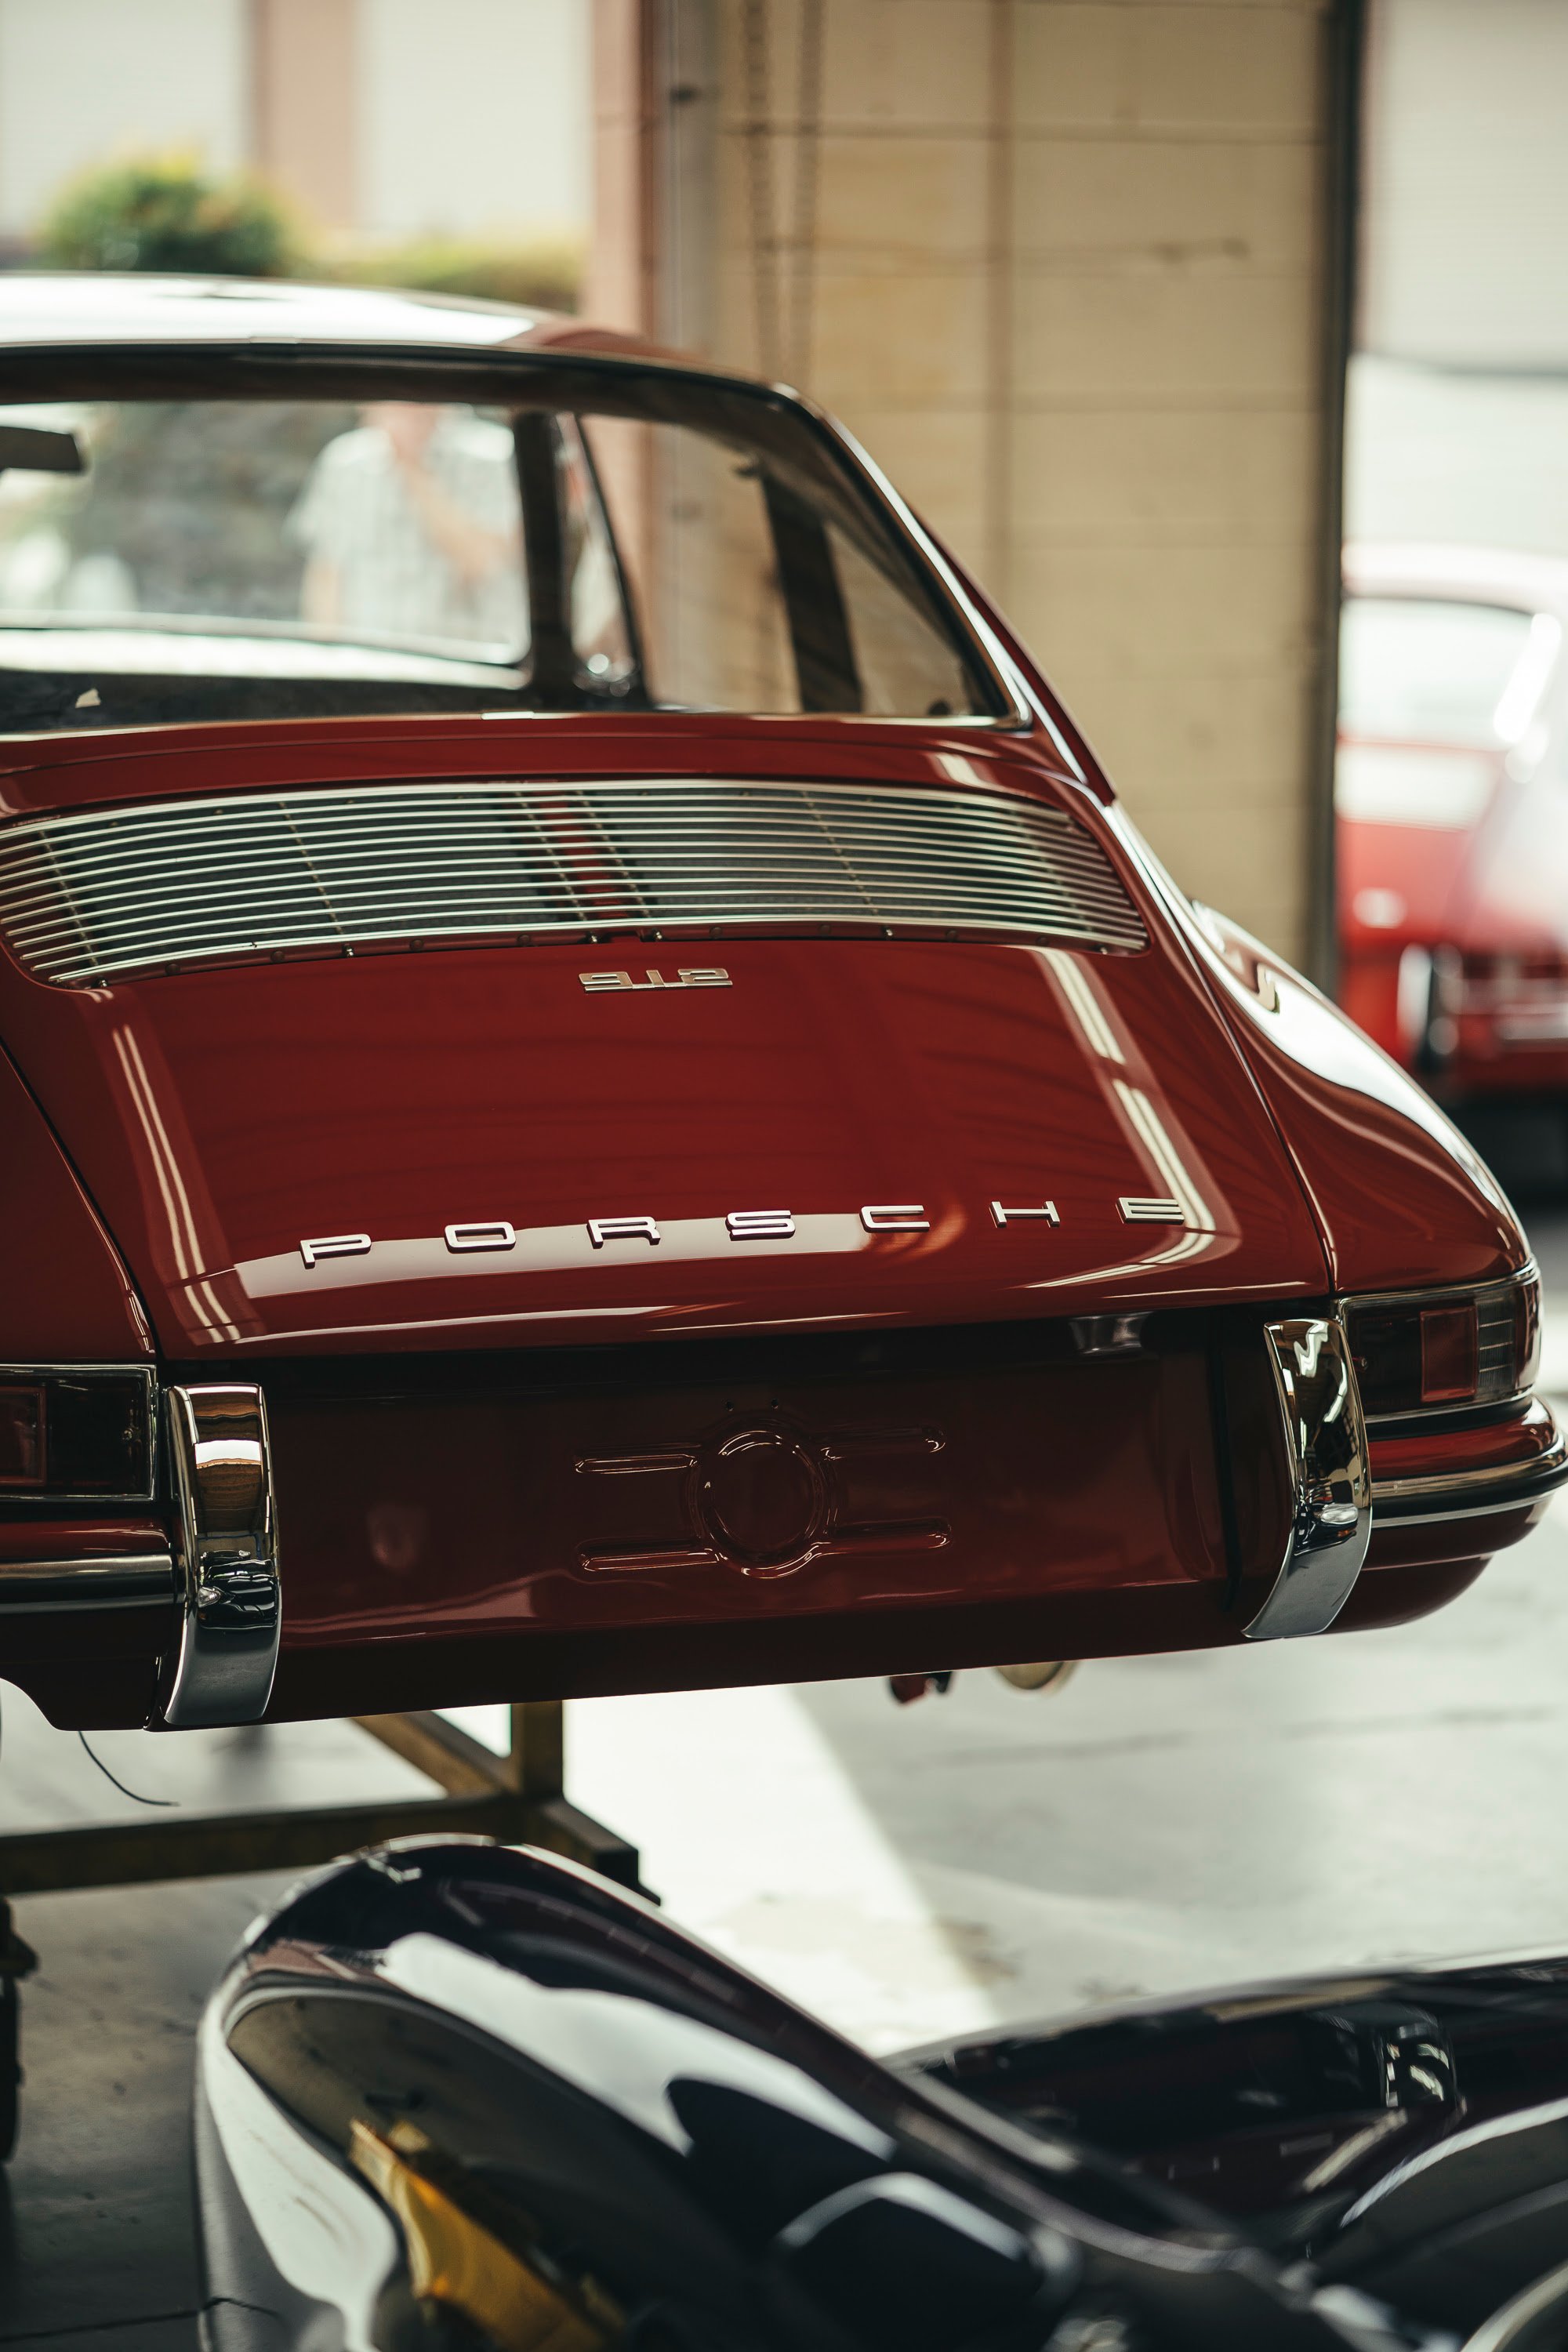 Red 912 awaiting restoration.